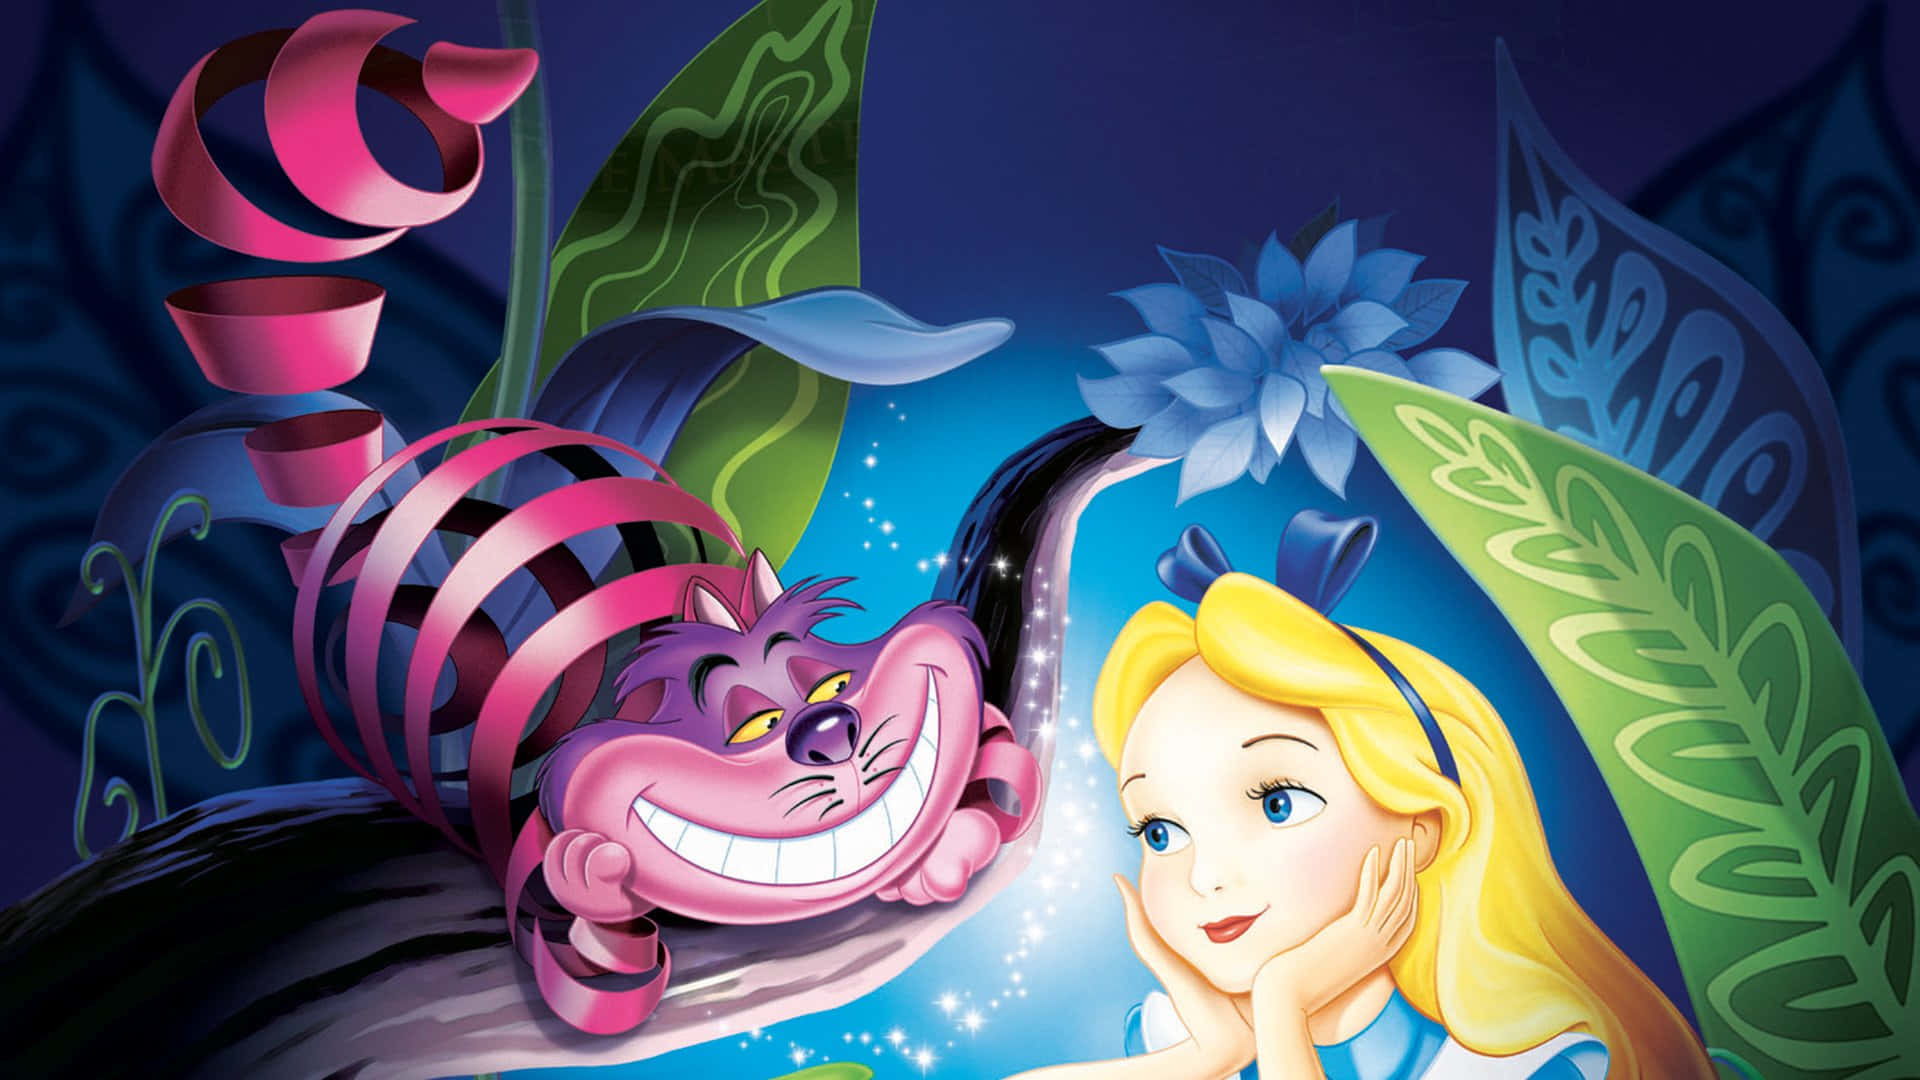 100+] Alice In Wonderland Pictures